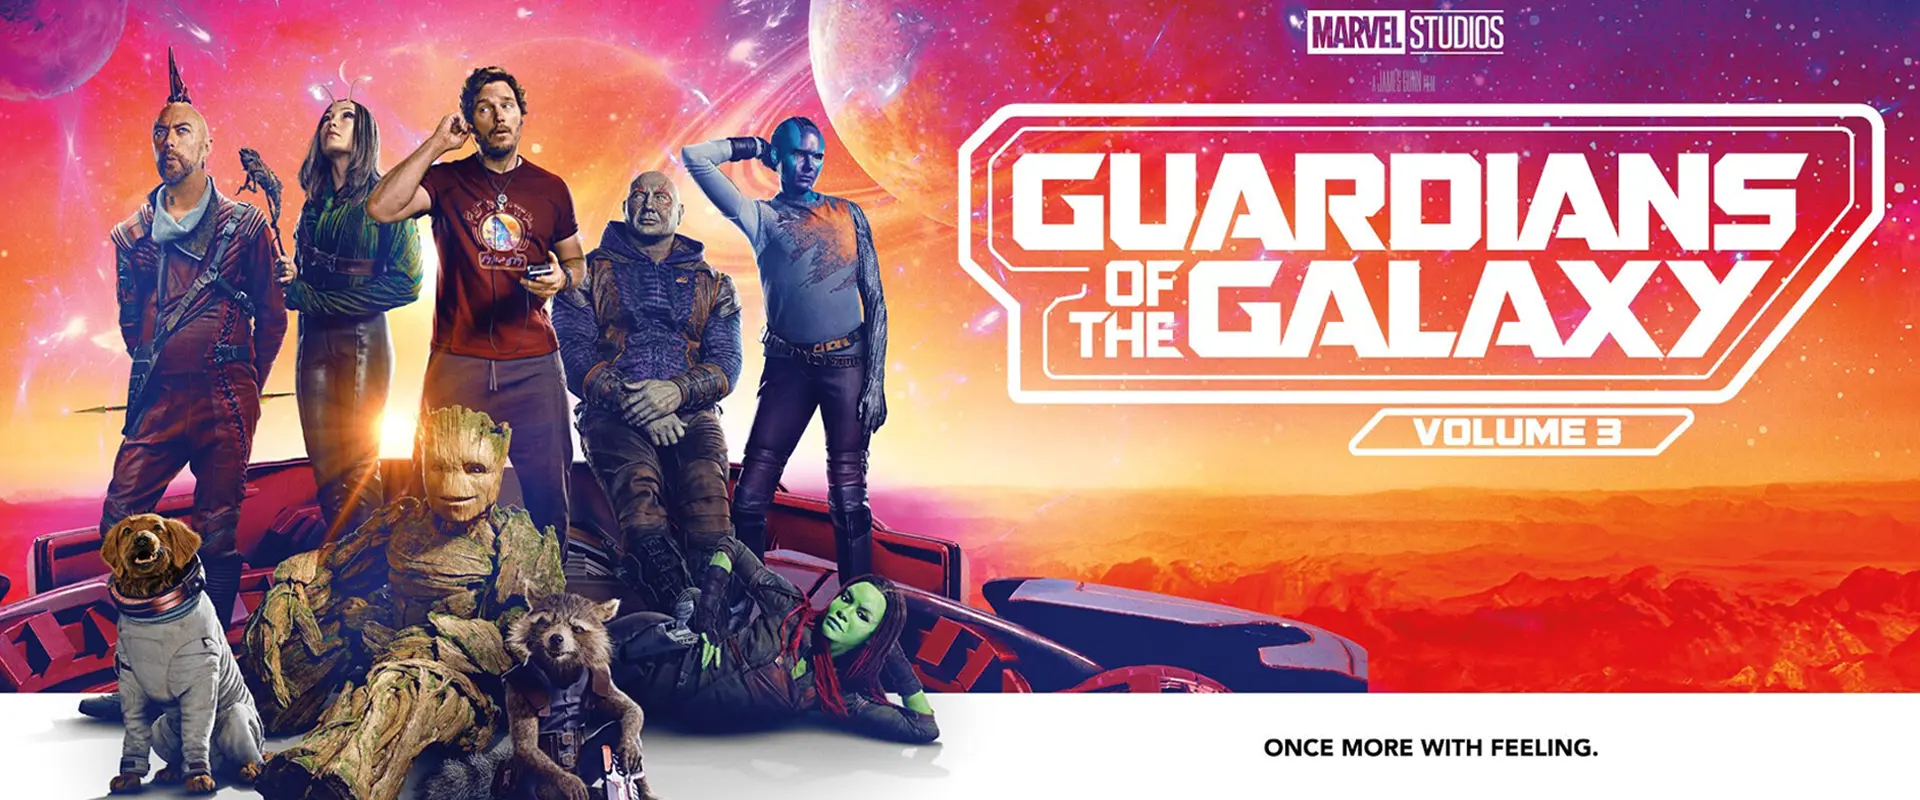 Guardians of the Galaxy Vol 3 (2023) รวมพันธุ์นักสู้พิทักษ์จักรวาล 3 - Movie777 - Movie777